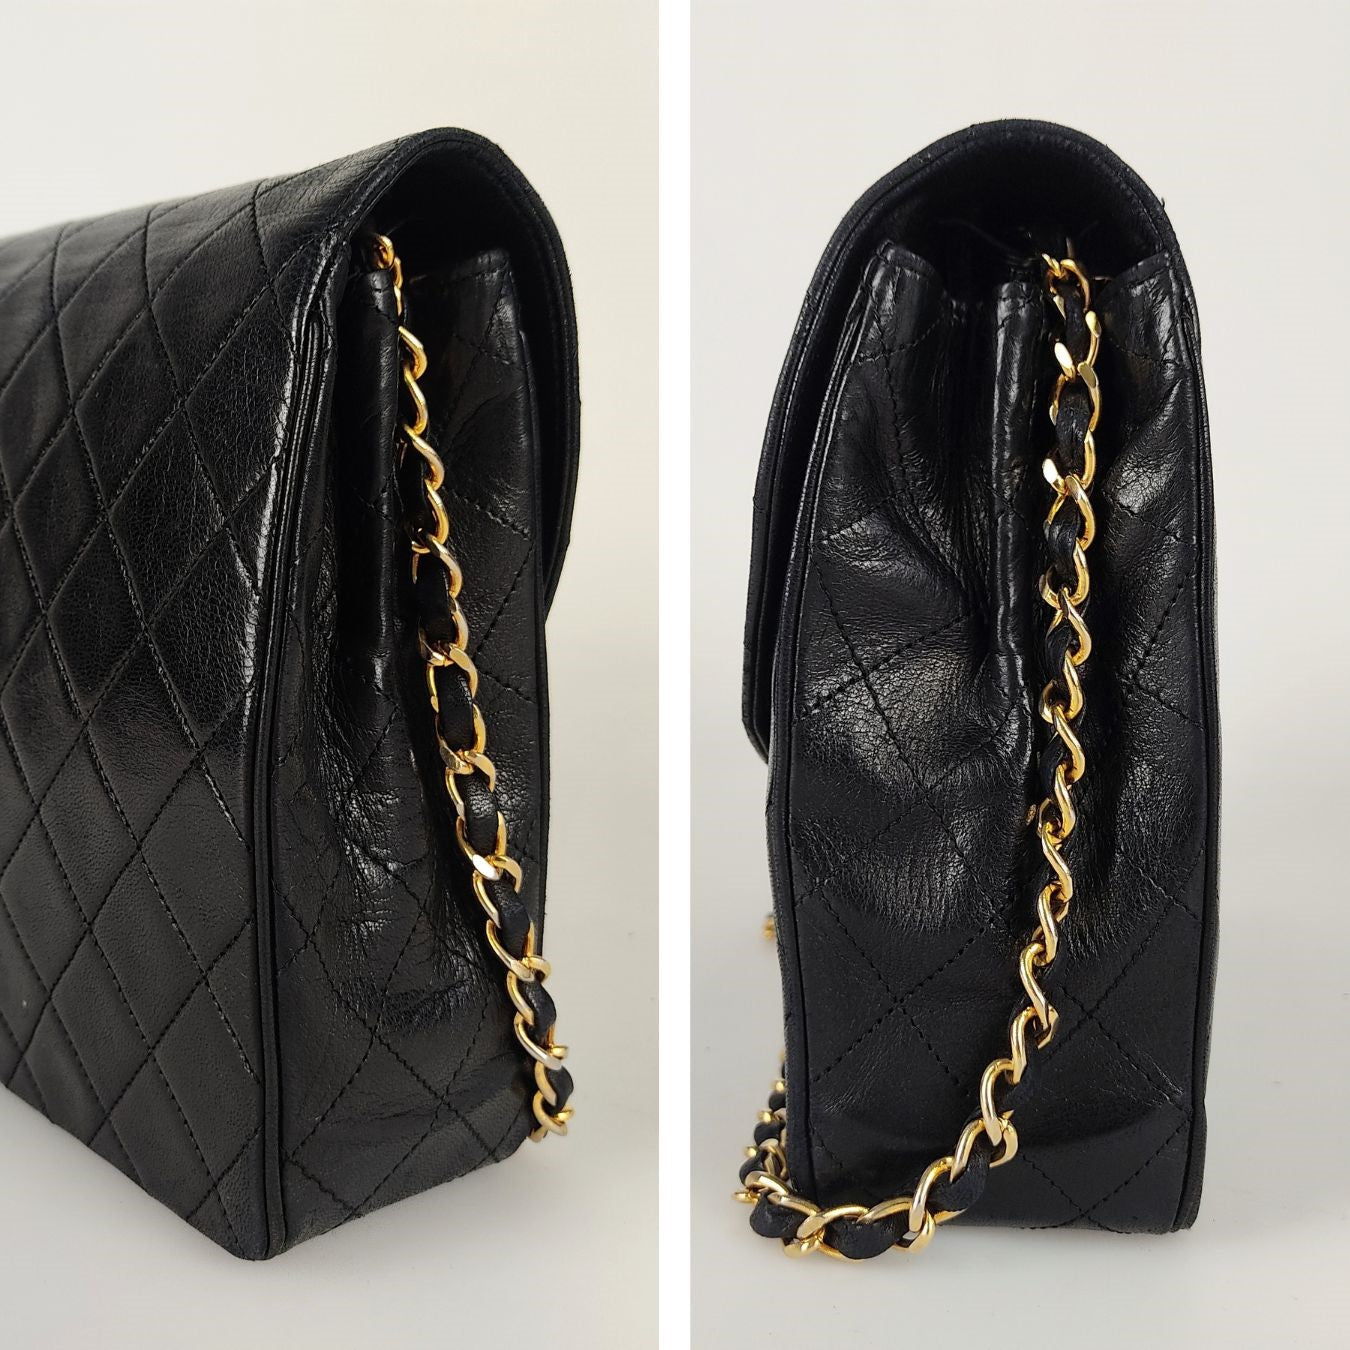 Chanel Classic Timeless In Black Matelassé Leather Shoulder Bag